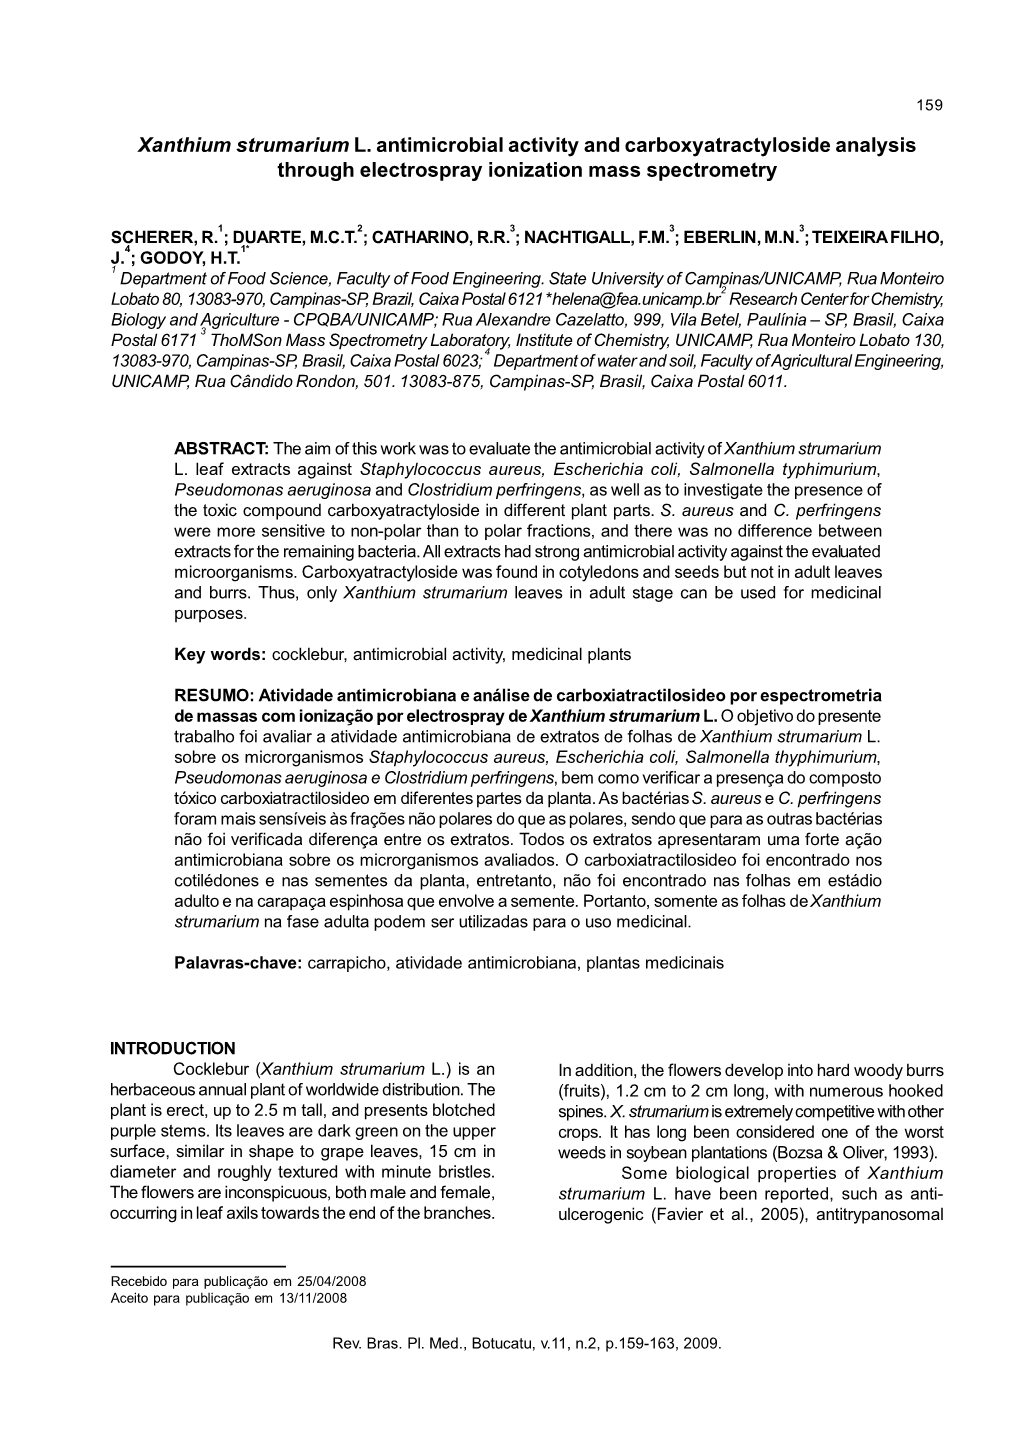 Xanthium Strumarium L. Antimicrobial Activity and Carboxyatractyloside Analysis Through Electrospray Ionization Mass Spectrometry